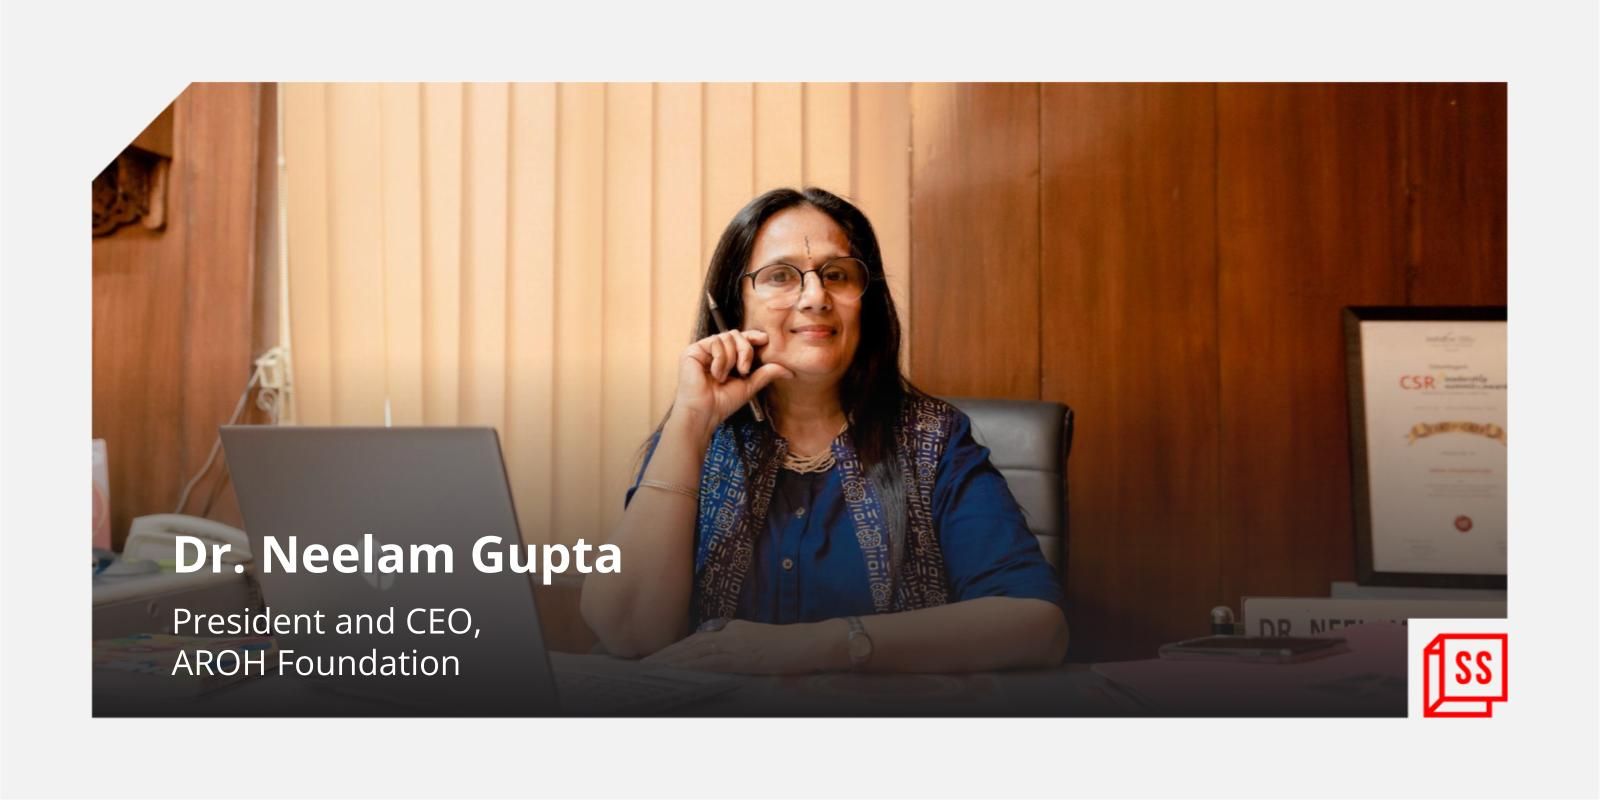 Meet Dr Neelam Gupta, the social entrepreneur empowering women and youth of marginalised communities